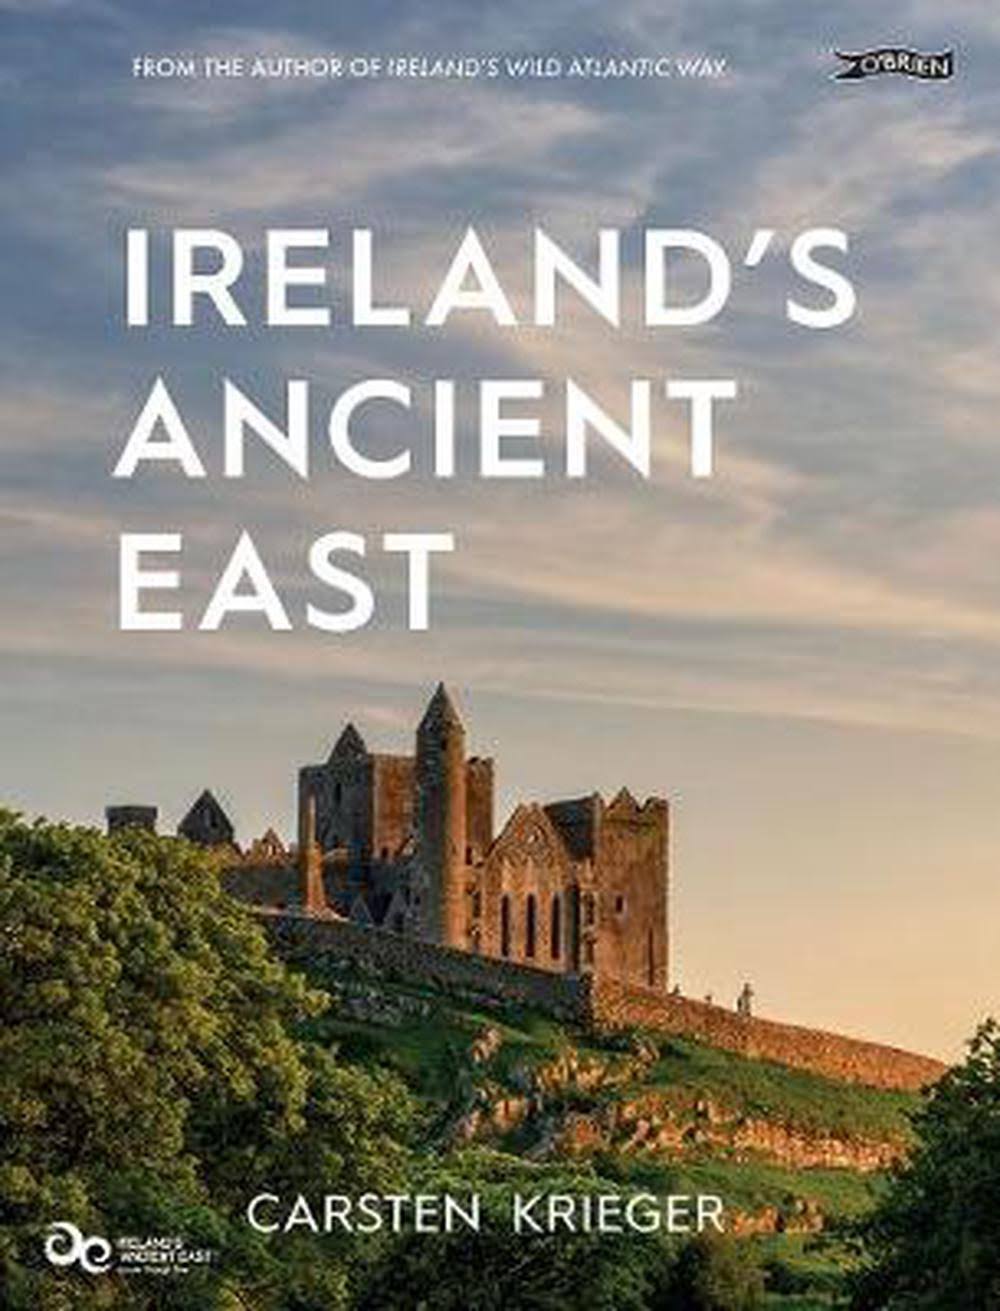 Ireland's Ancient East by Carsten Krieger